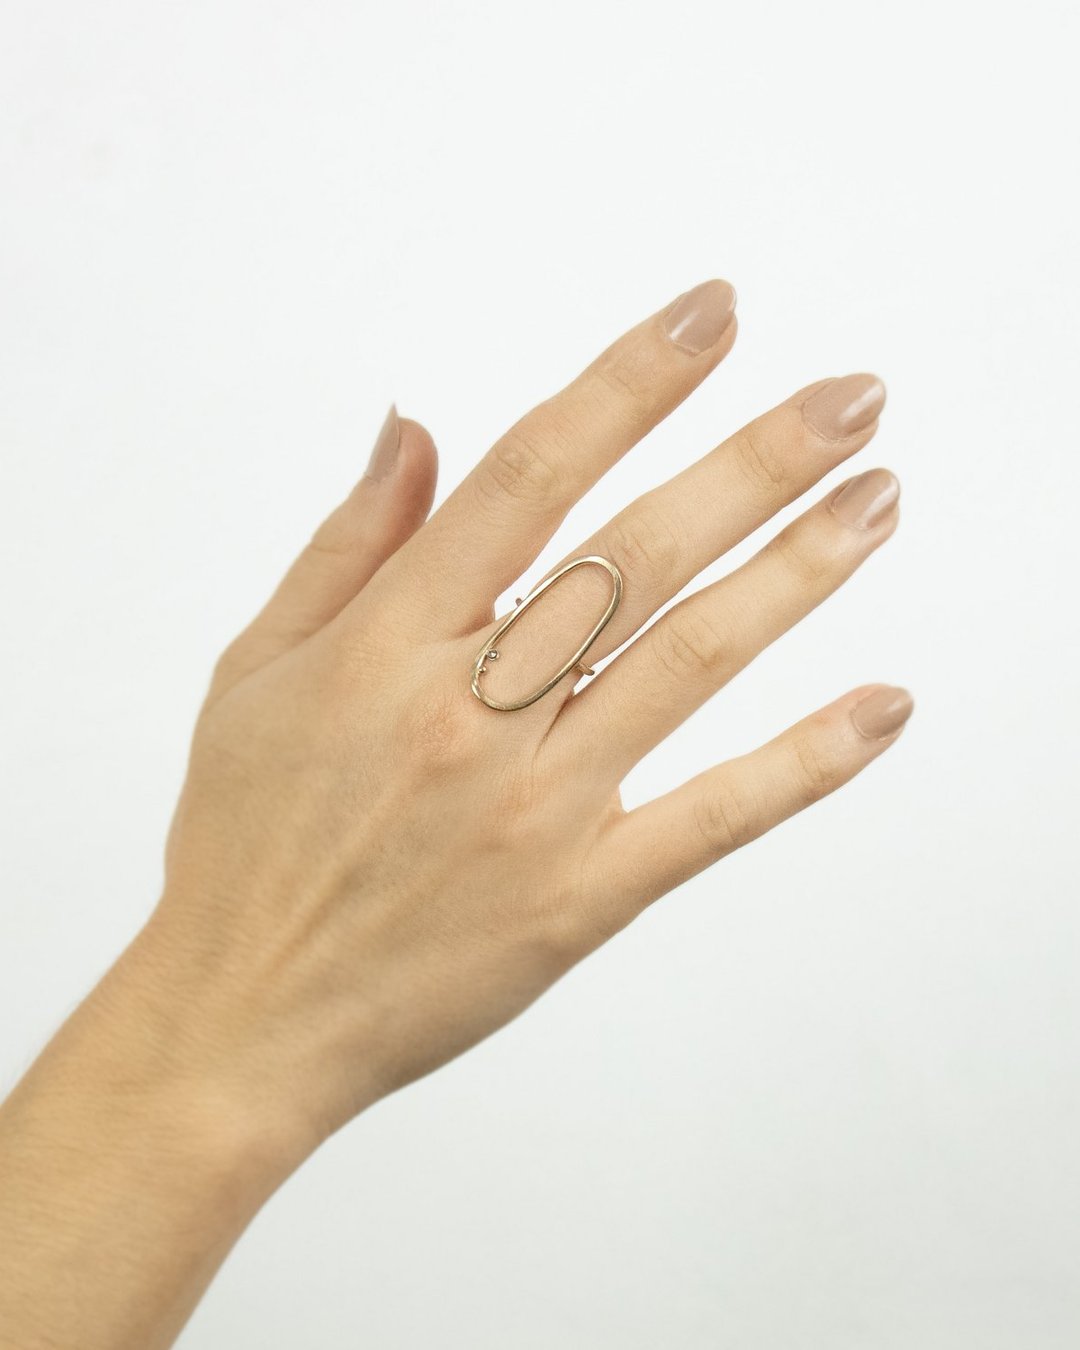 Haiku Silver Handmade ring